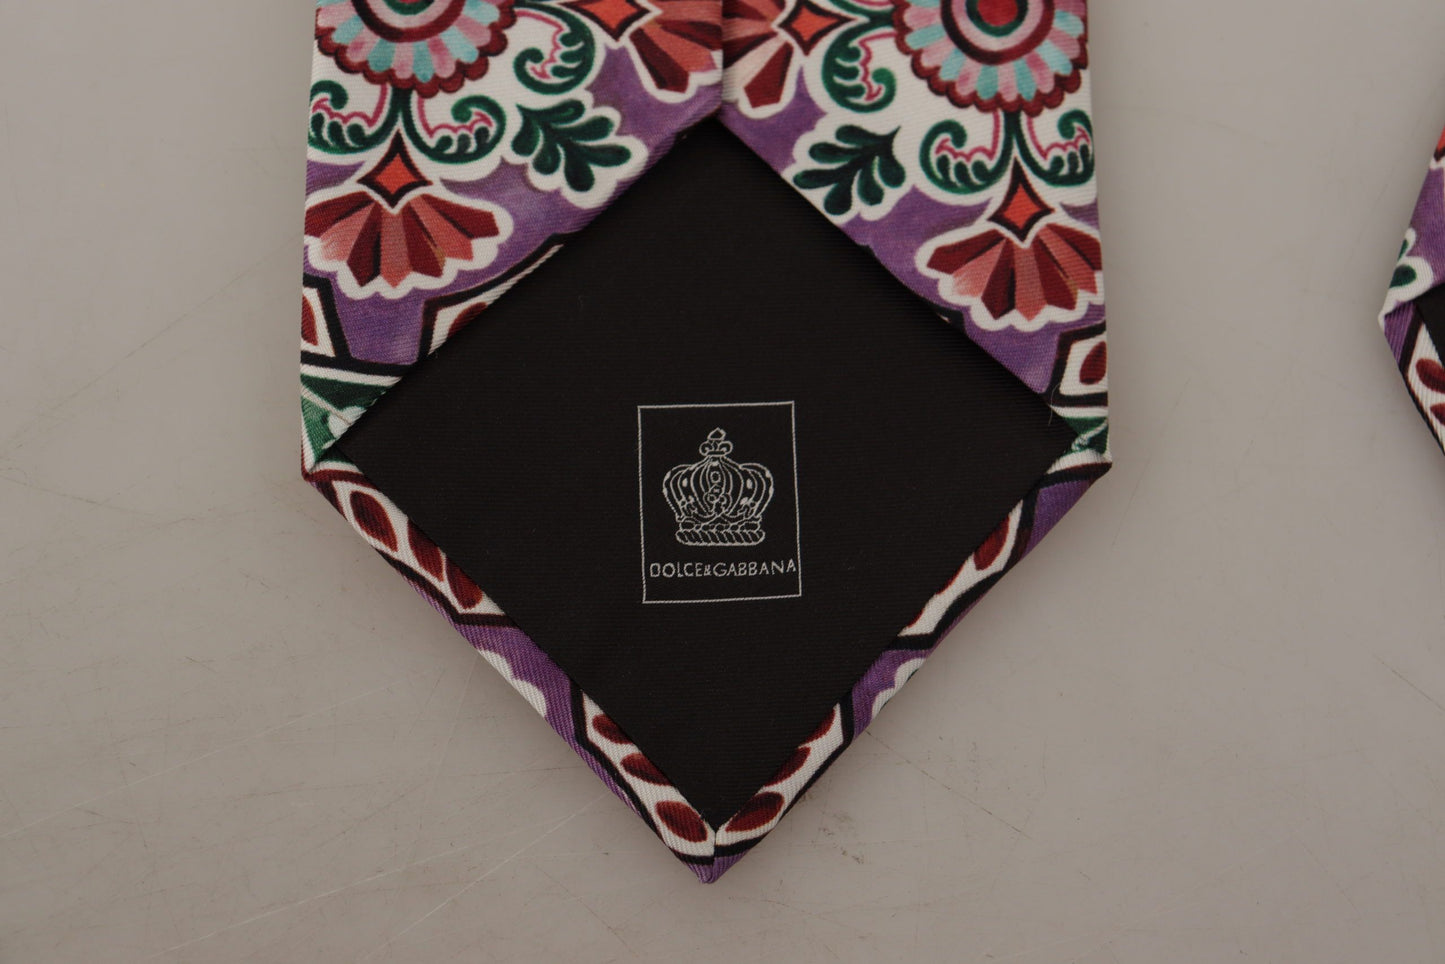 Dolce & Gabbana Multicolor Fantasy pattern Necktie Accessory